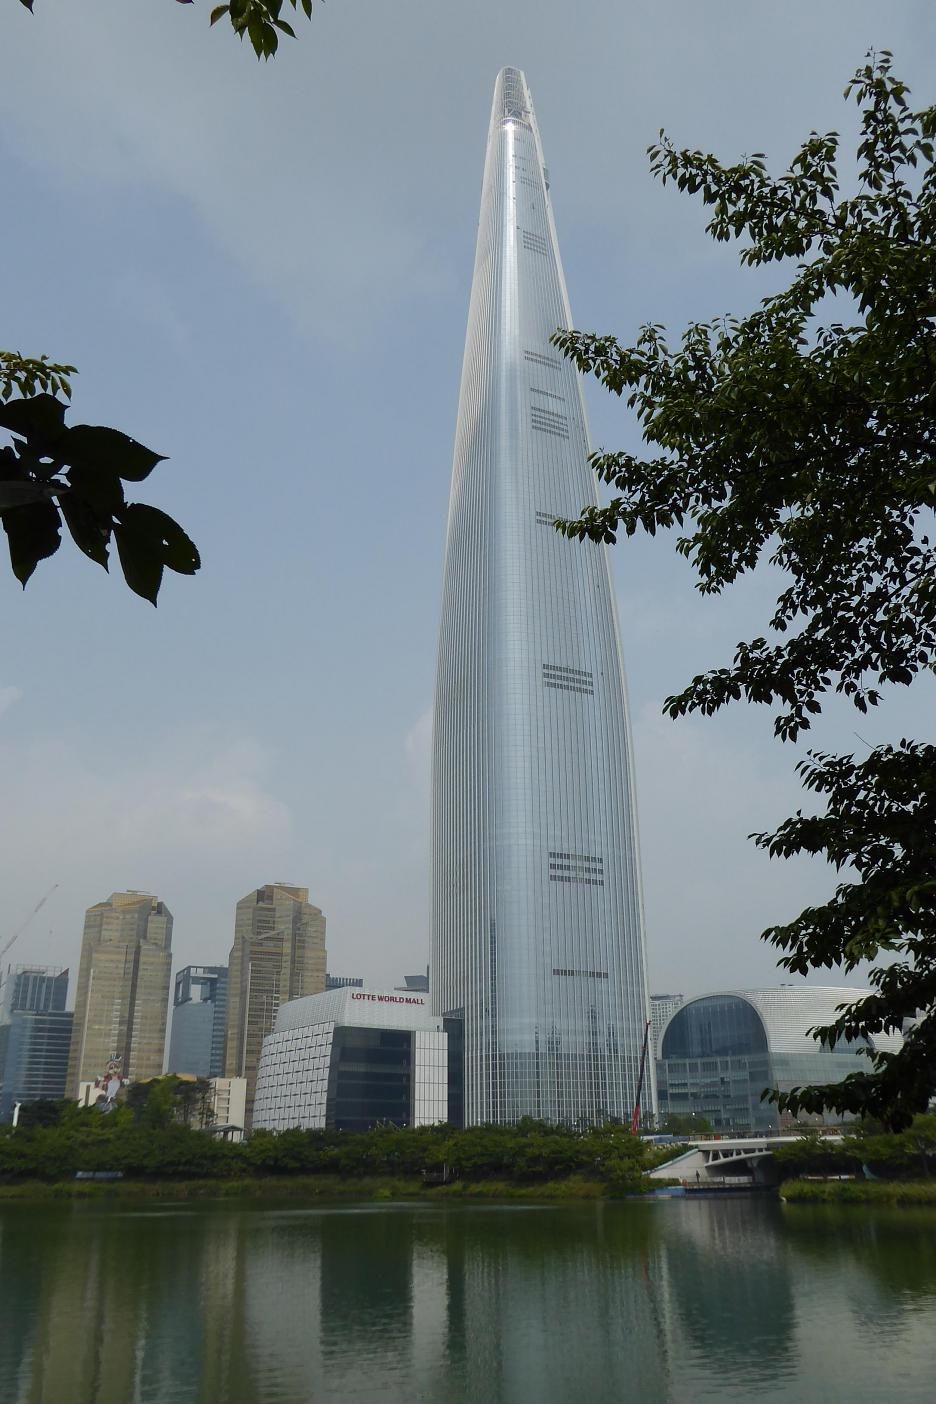 LOTTE WORLD TOWER – 555 m supervysoký mrakodrap so 123 podlažiami, najvyšší t.č. v krajinách OECD, s LED panelmi na fasáde, dokončený v marci 2016